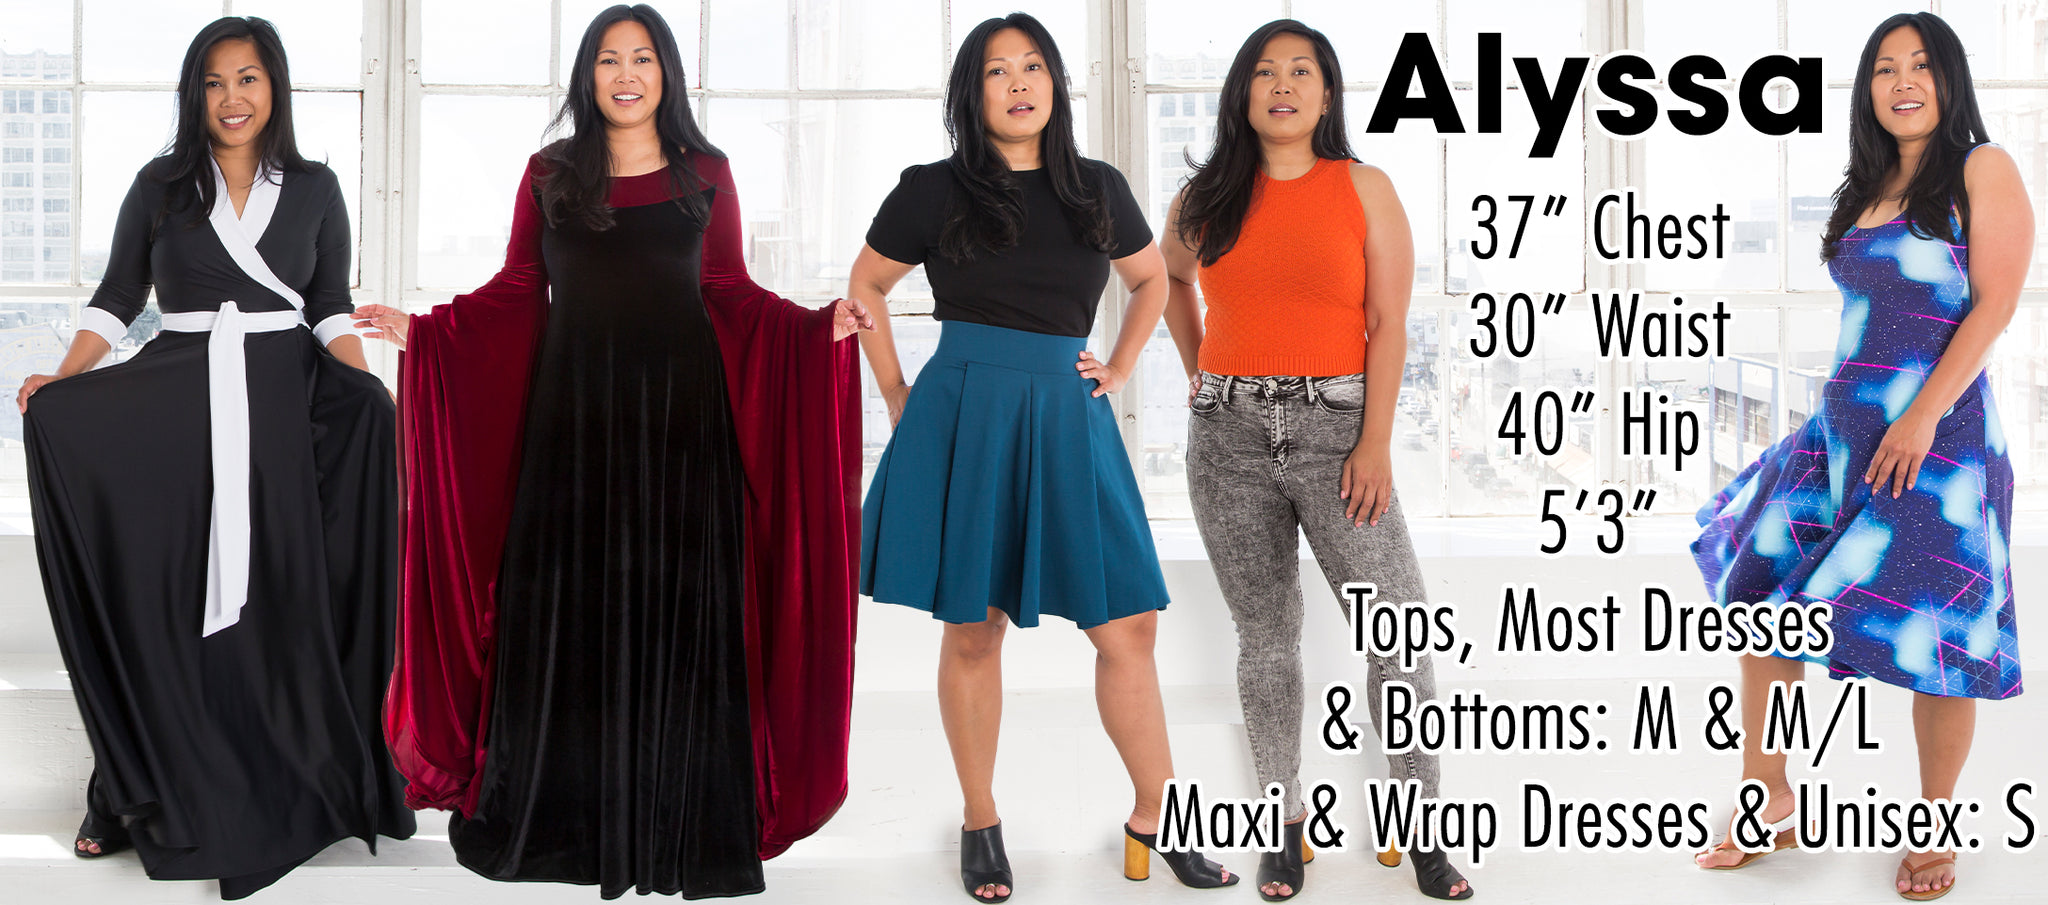 Alyssa - 37” Chest 30” Waist 40” Hip 5’3” Height - Tops, Most Dresses & Bottoms: M & M/L - Maxi & Wrap Dresses & Unisex: S